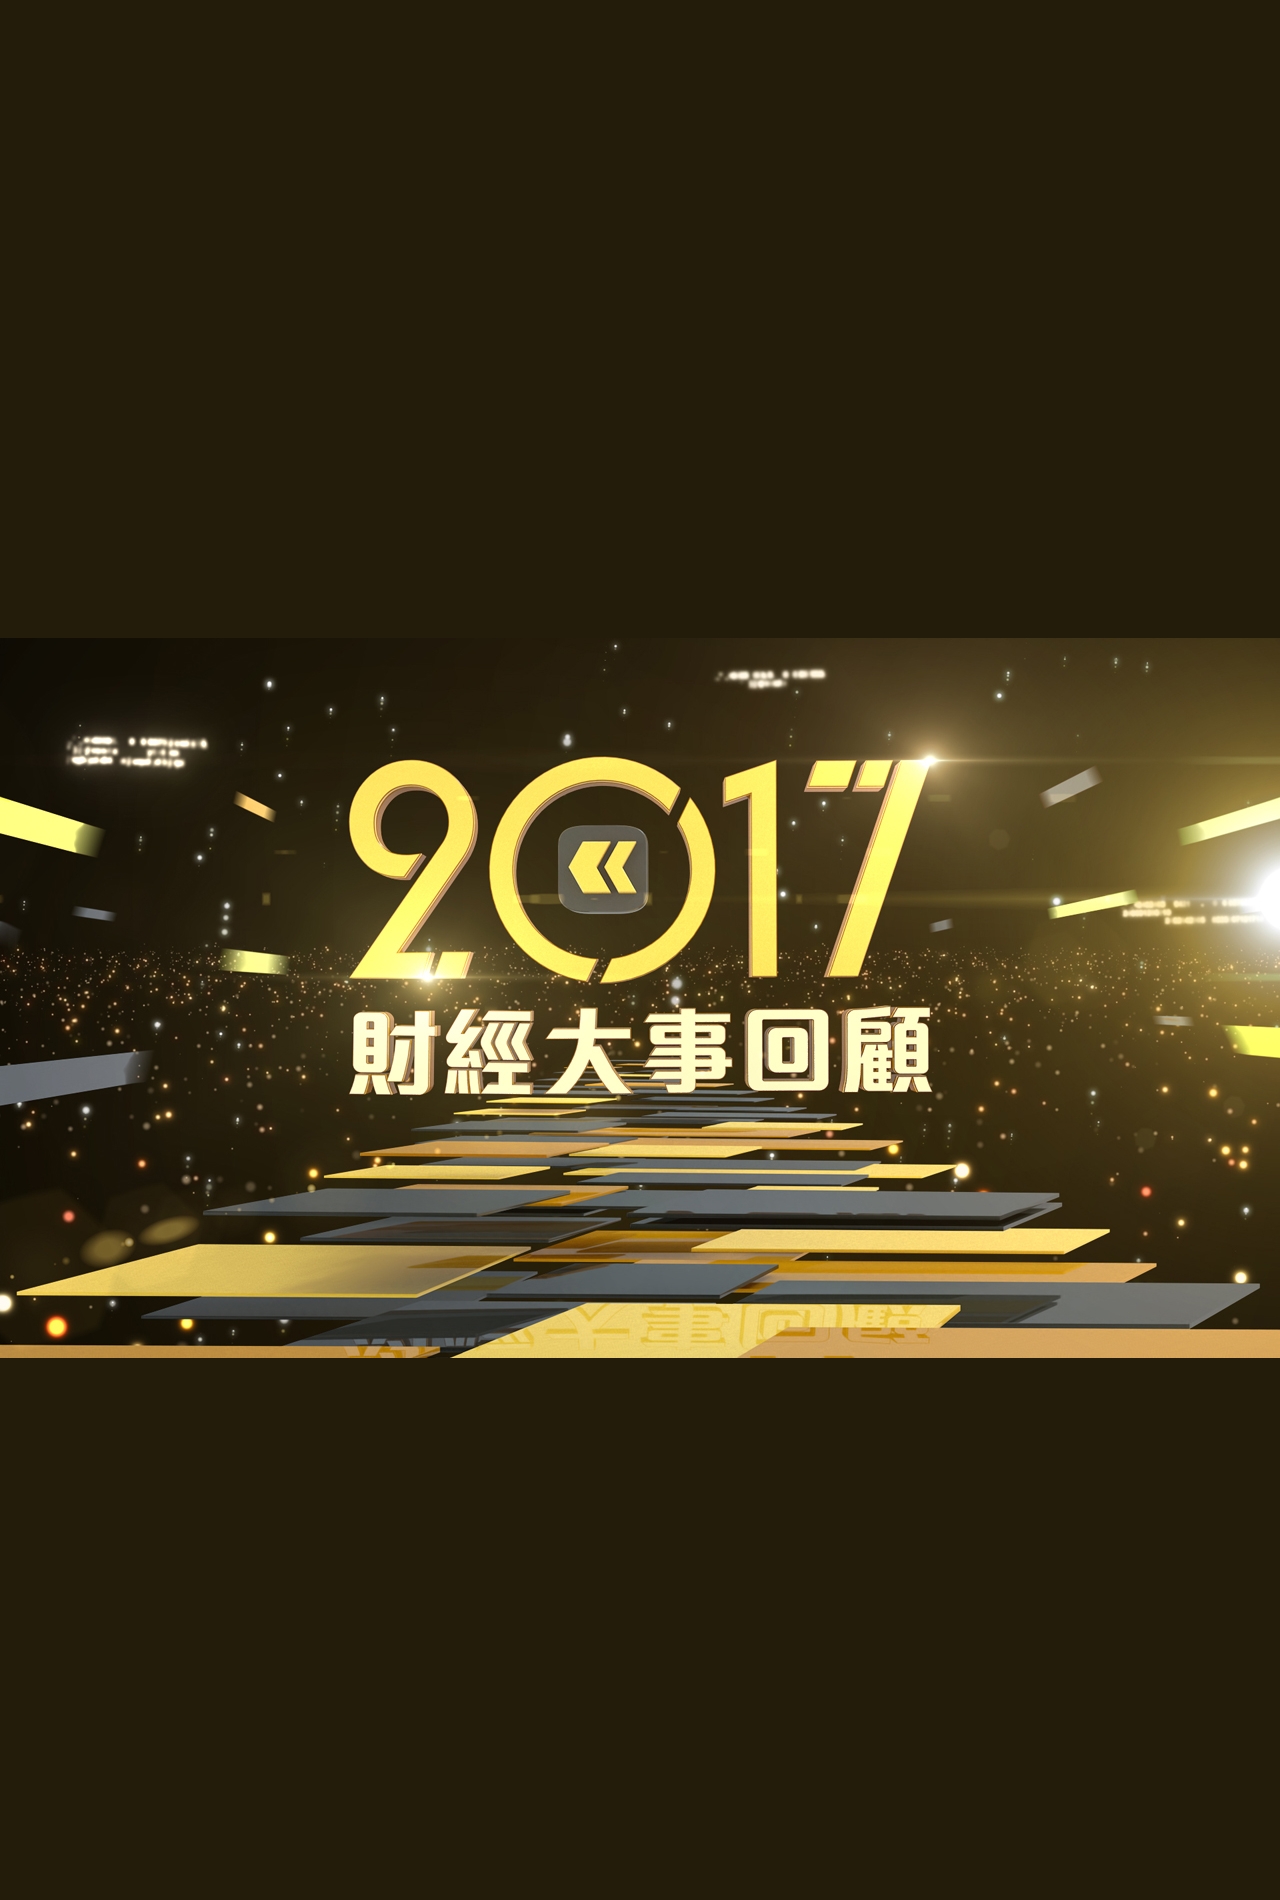 2017 Financial Review - 2017財經大事回顧